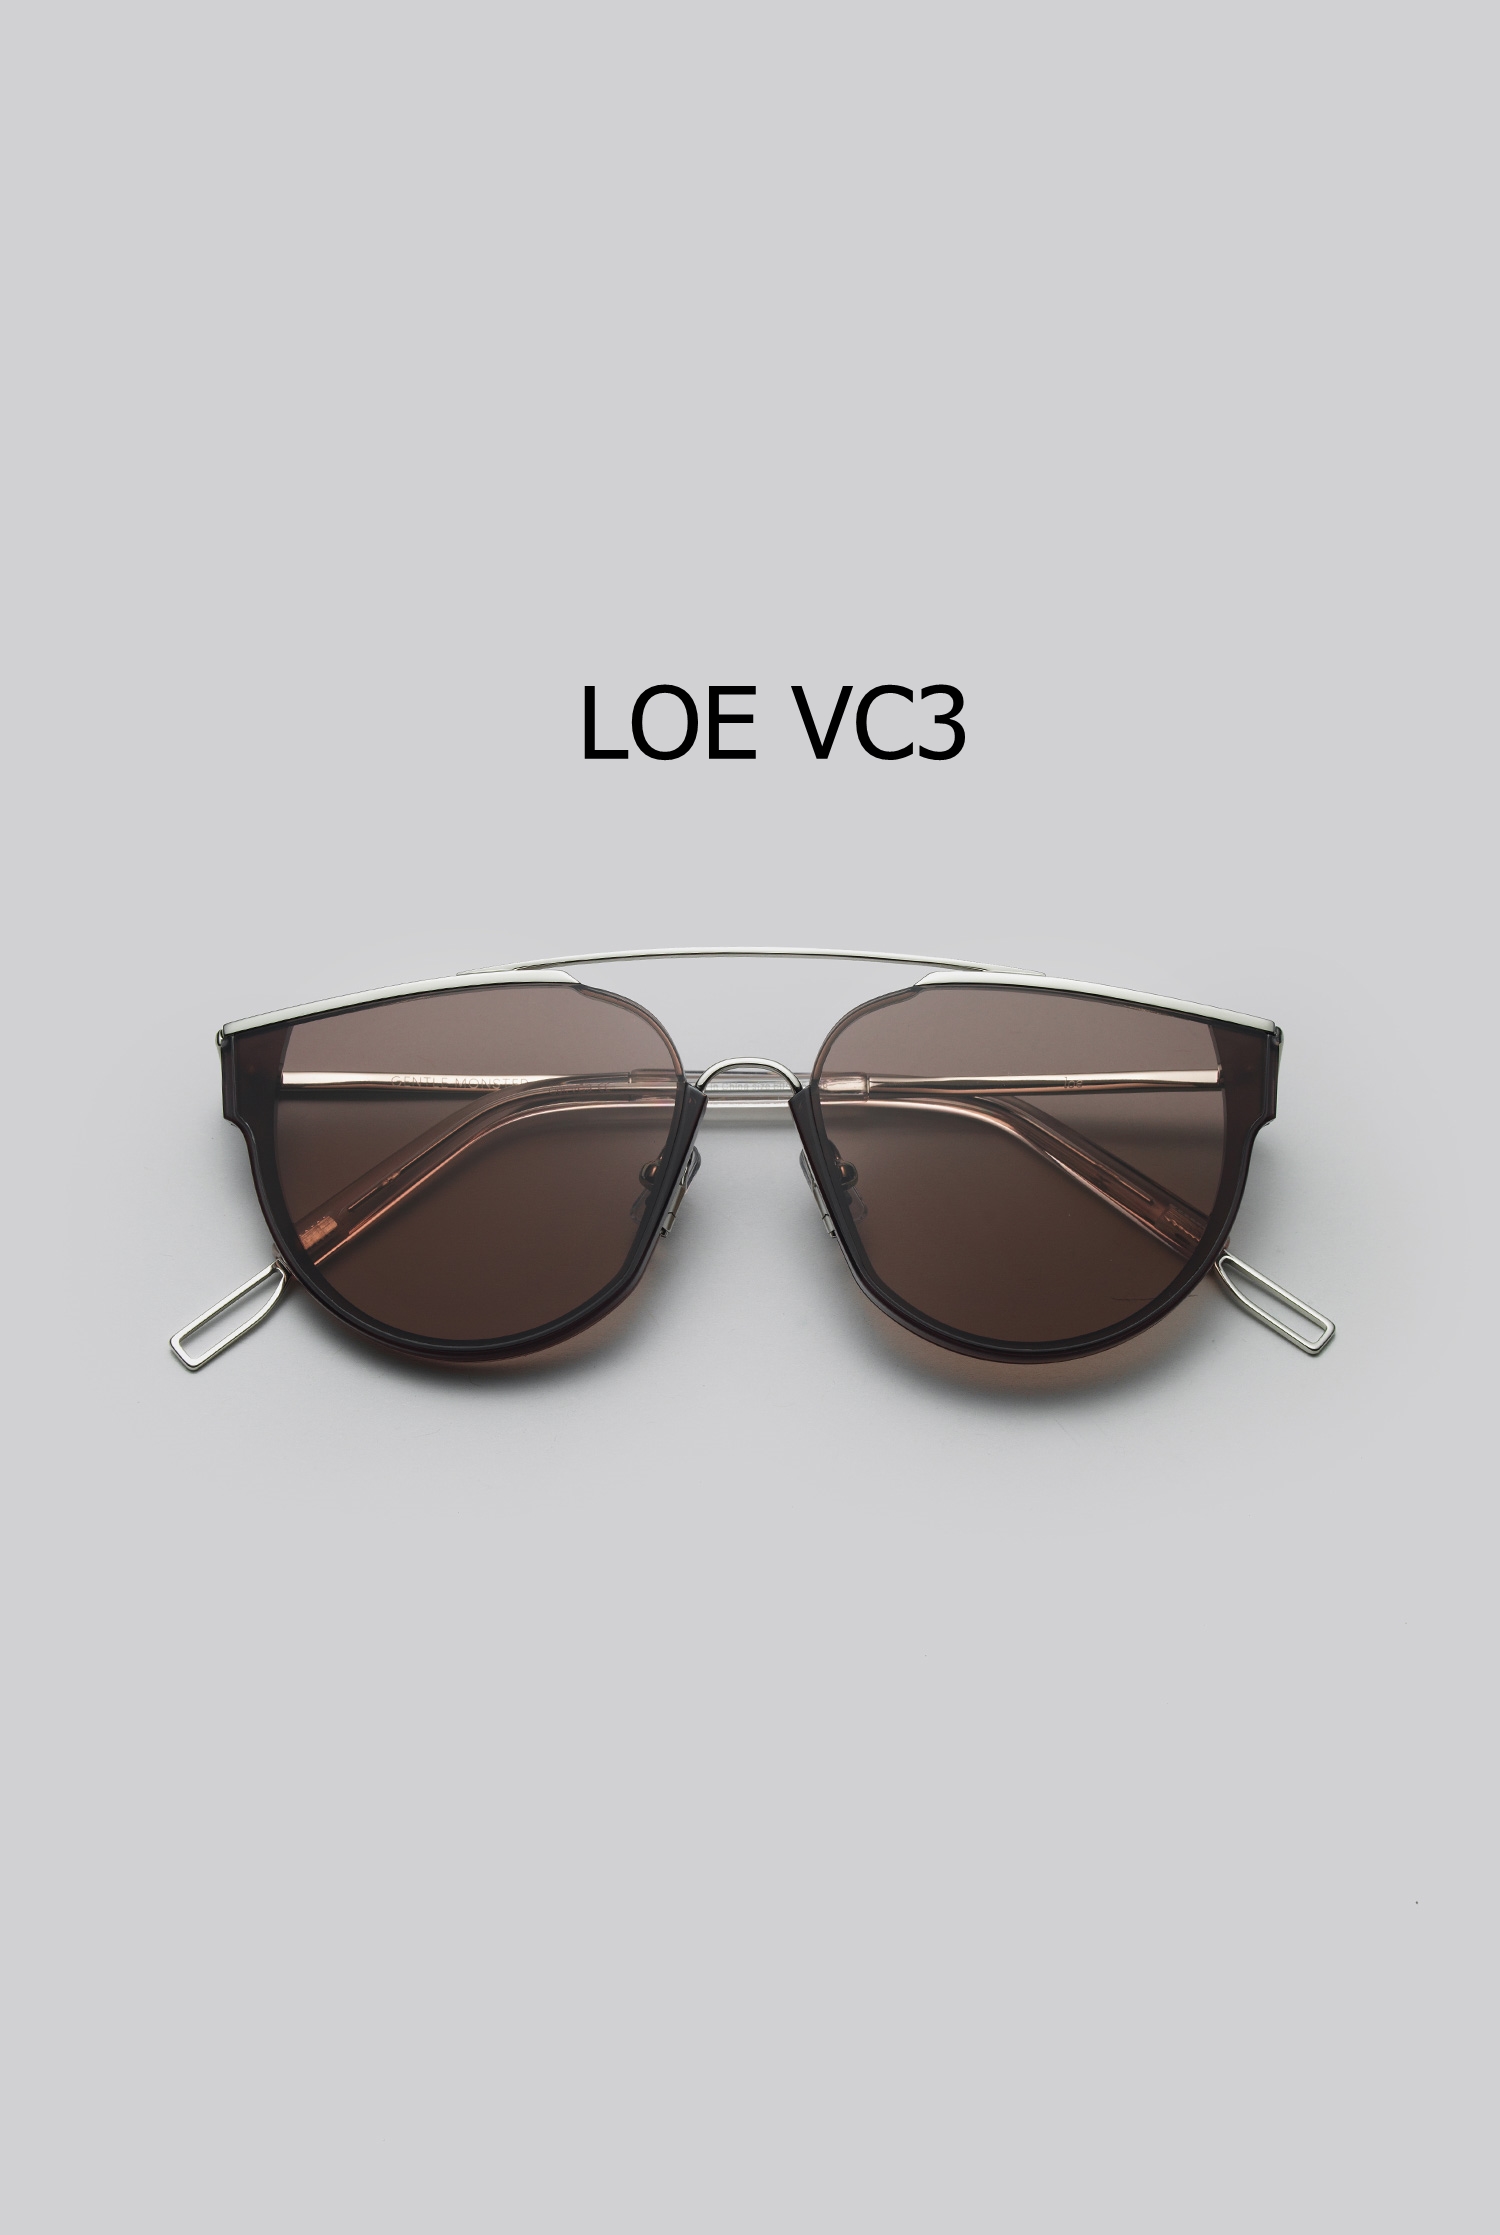 LOE VC3 